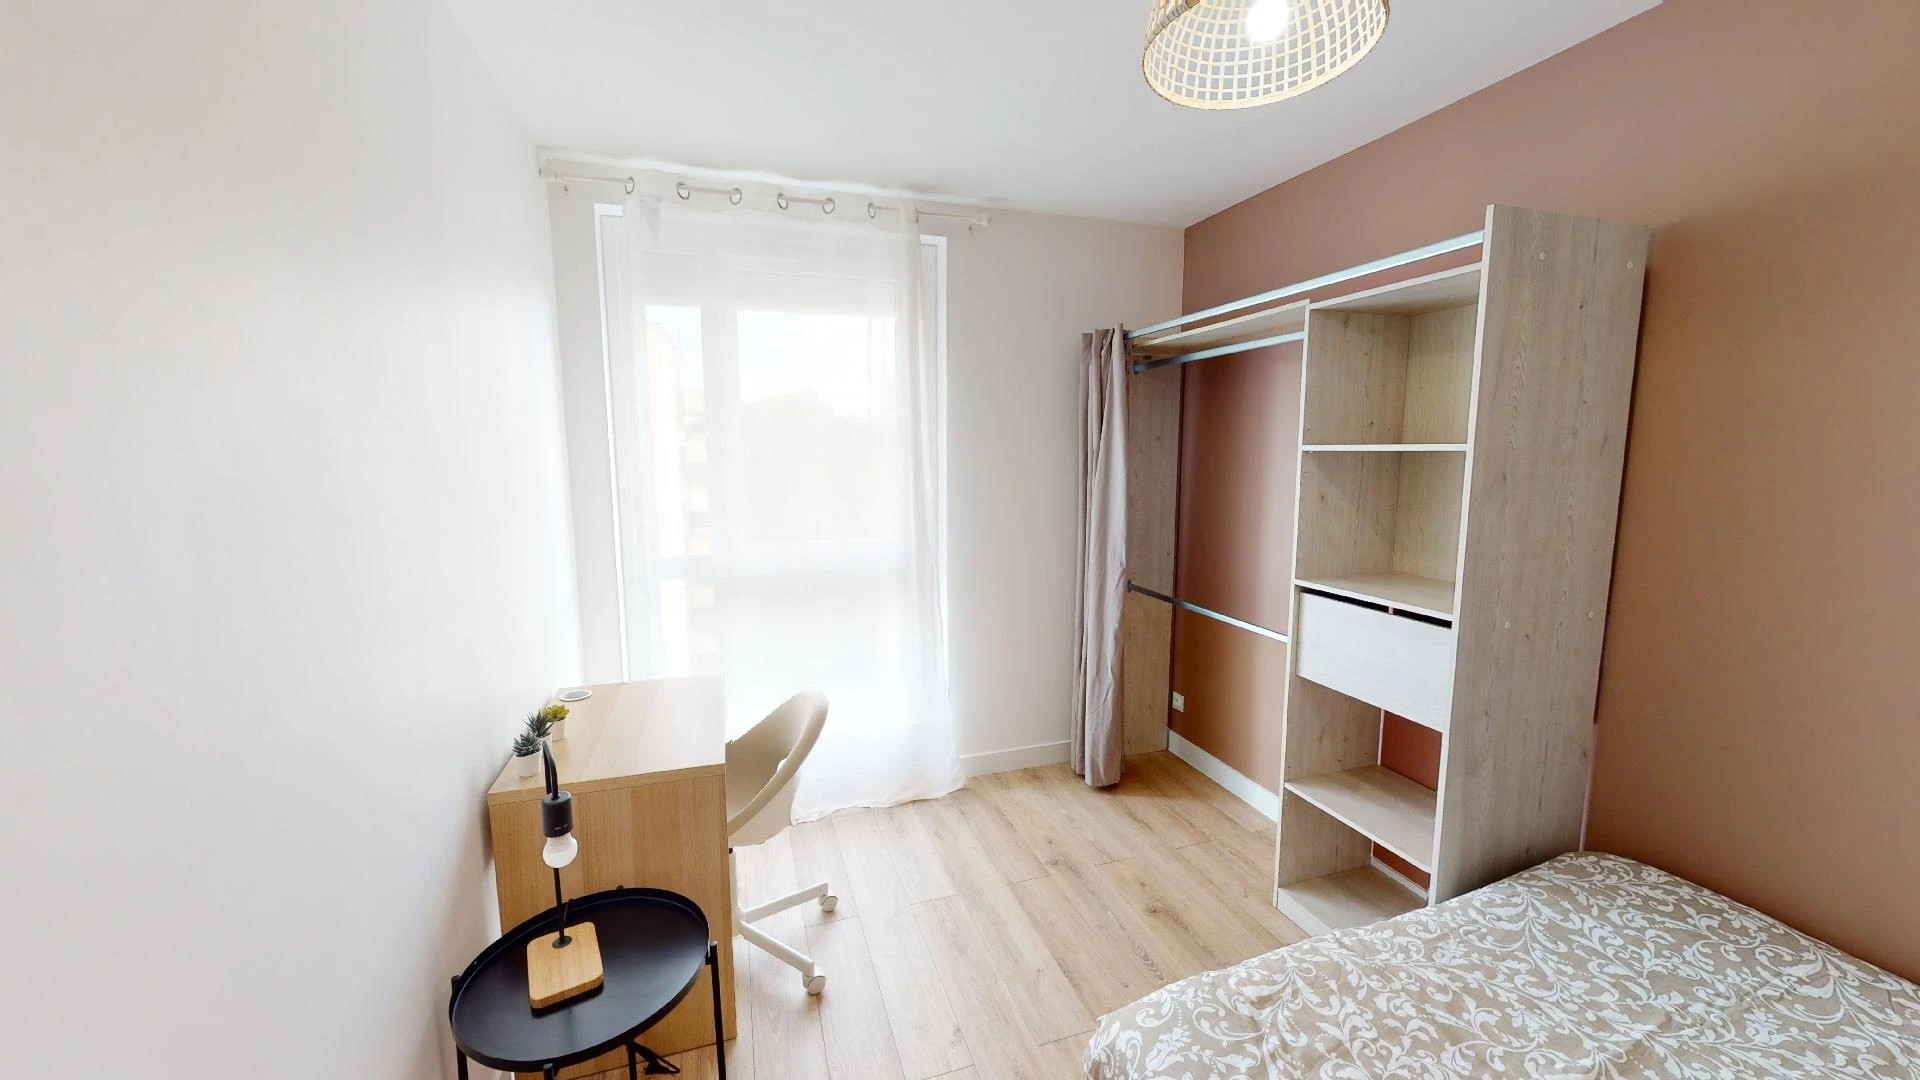 Cheap private room in Caen